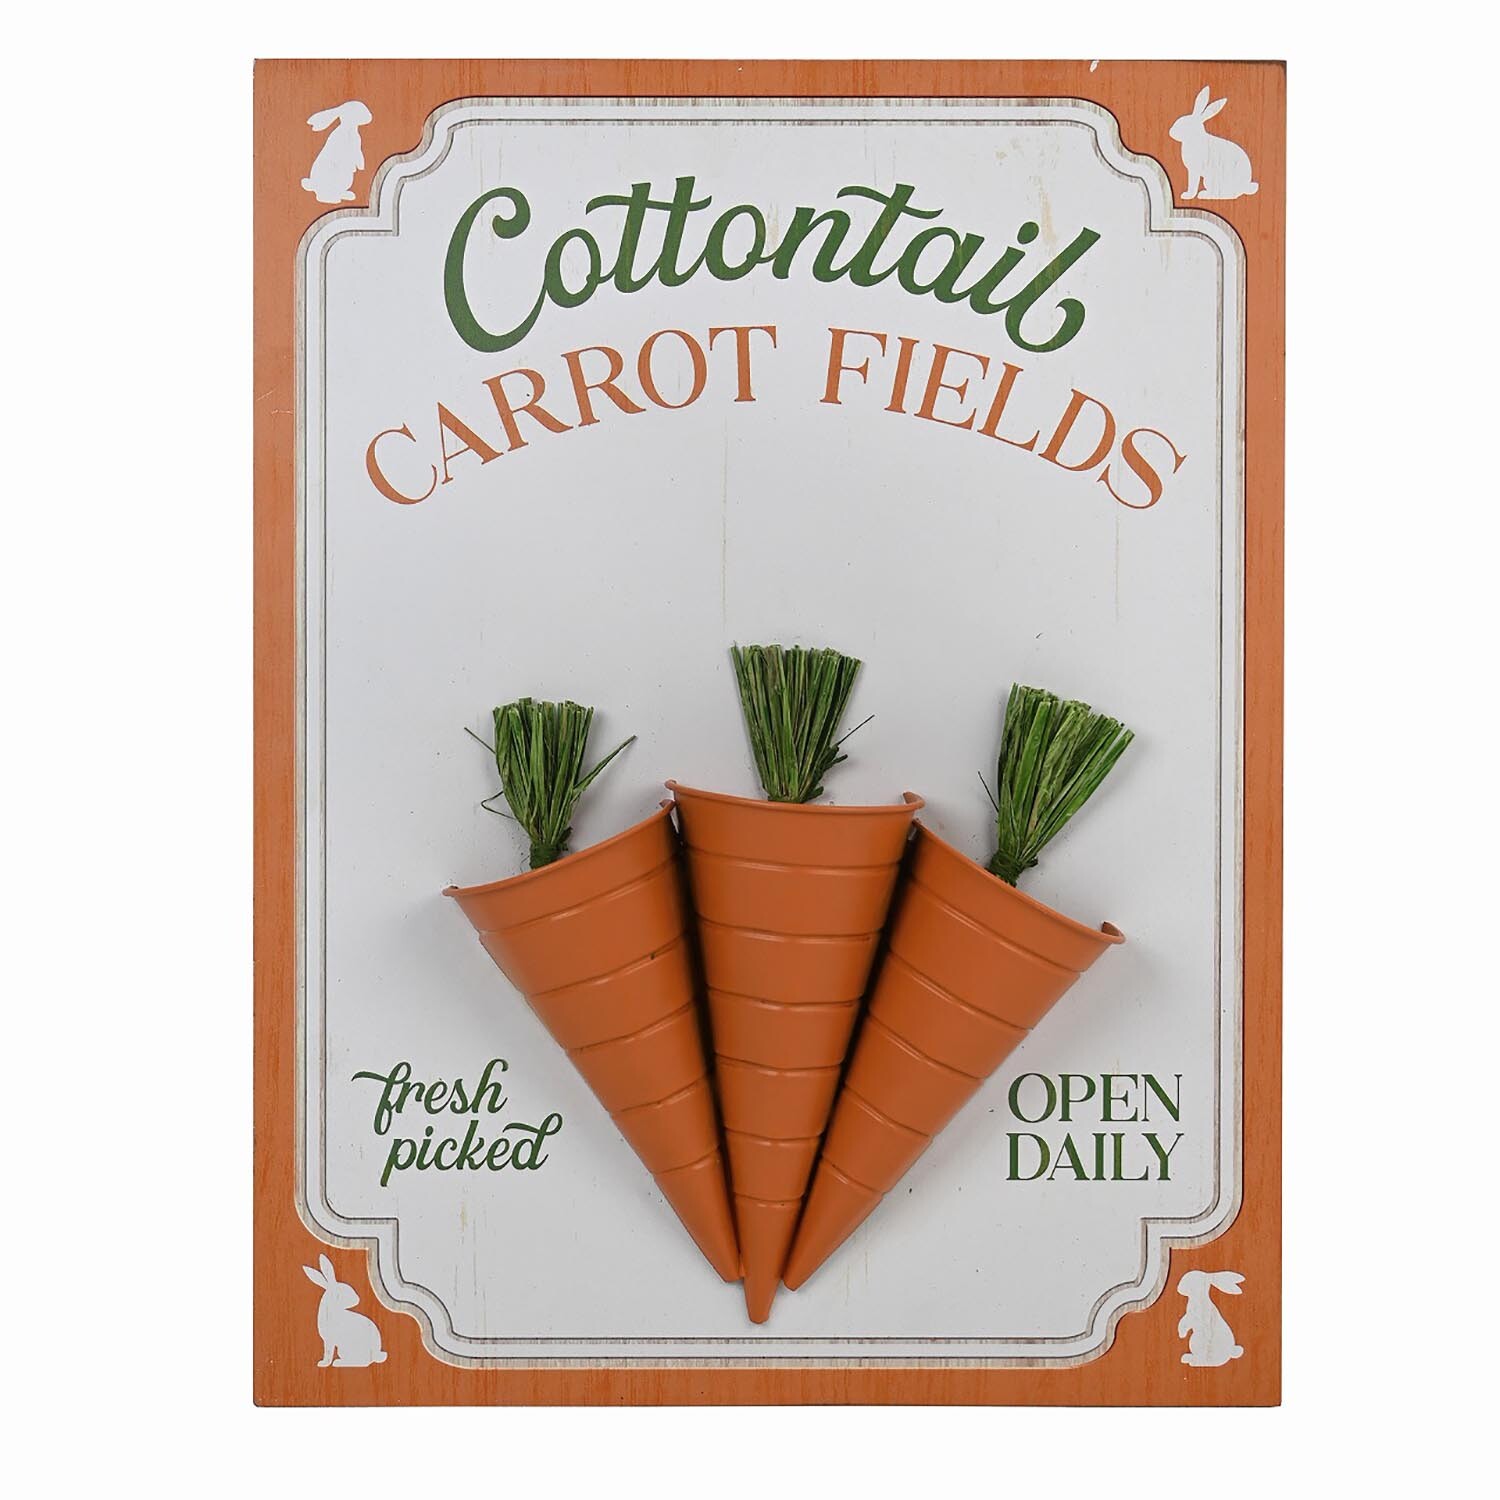 Cottontail Carrot Fields Plaque - Orange Image 2